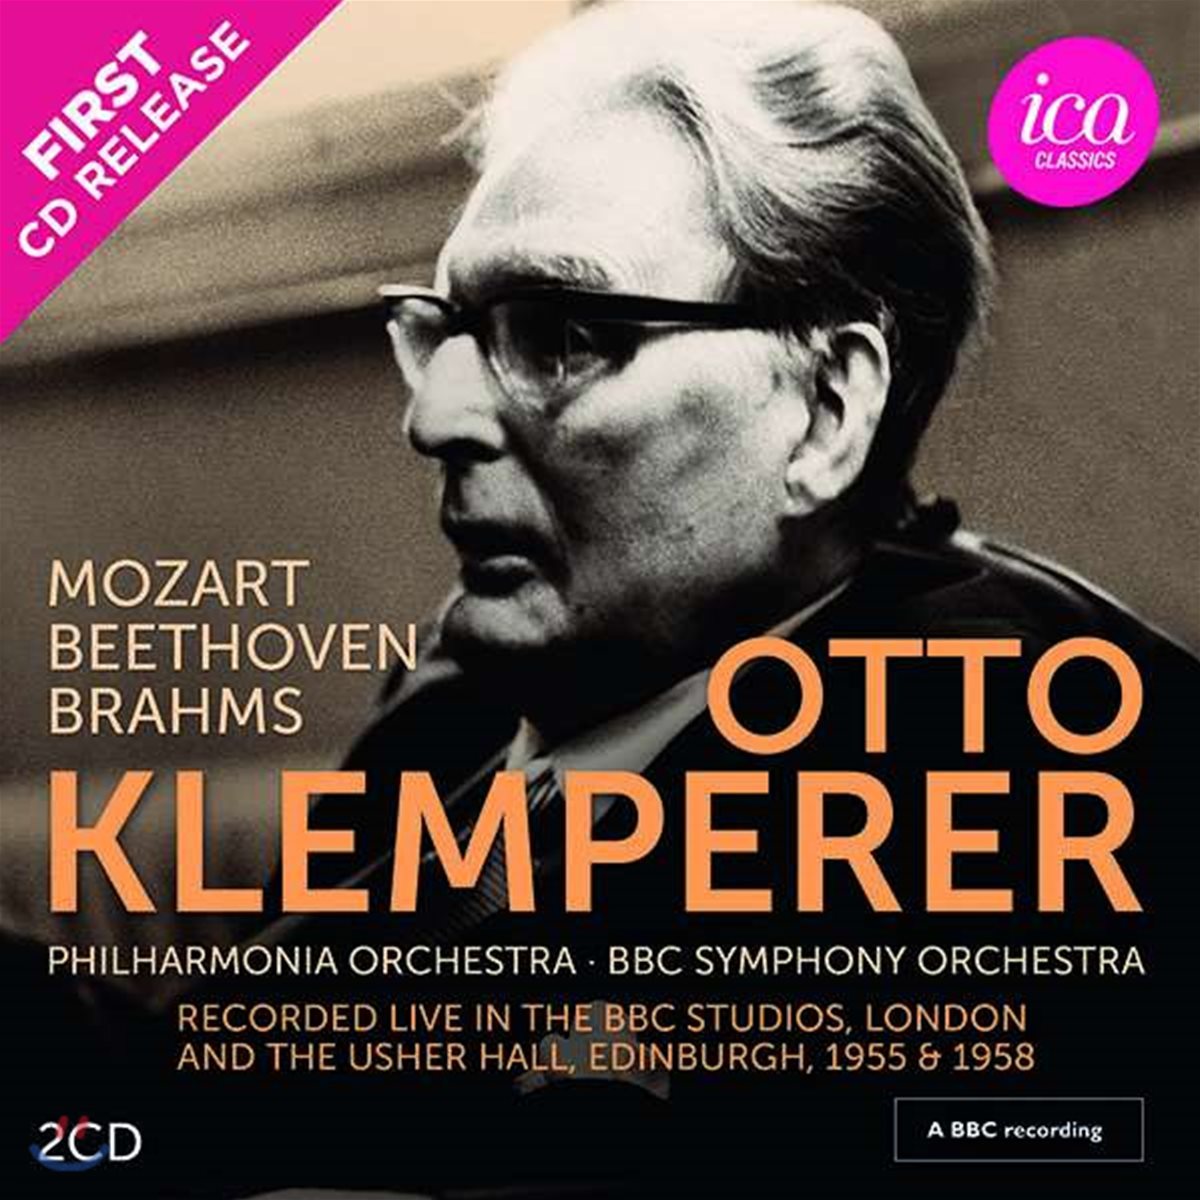 Otto Klemperer 오토 클렘페러 BBC 녹음집 - 모차르트: 교향곡 25번 / 베토벤: 교향곡 5번 / 브람스: 독일 레퀴엠